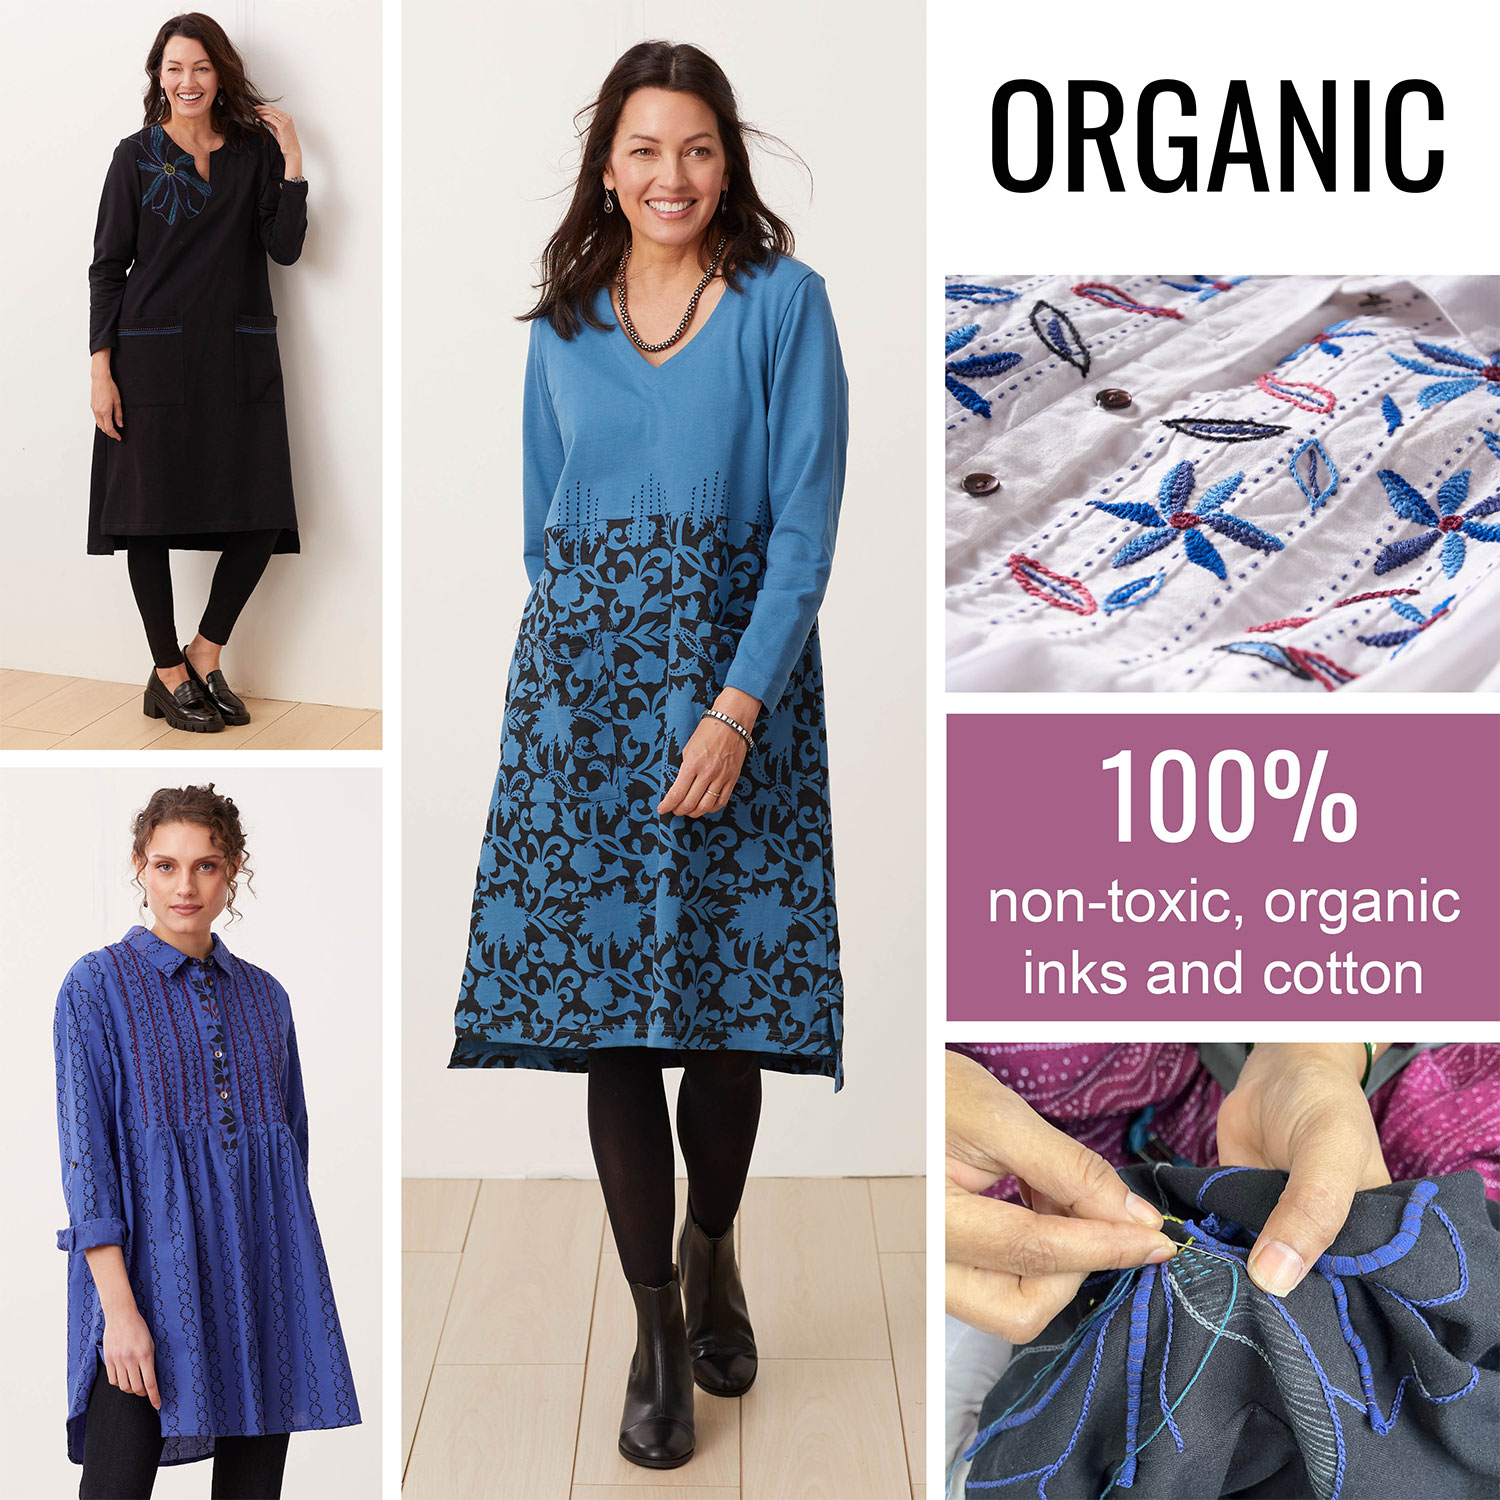 ORGANIC 100% non-toxic, organic inks and cotton